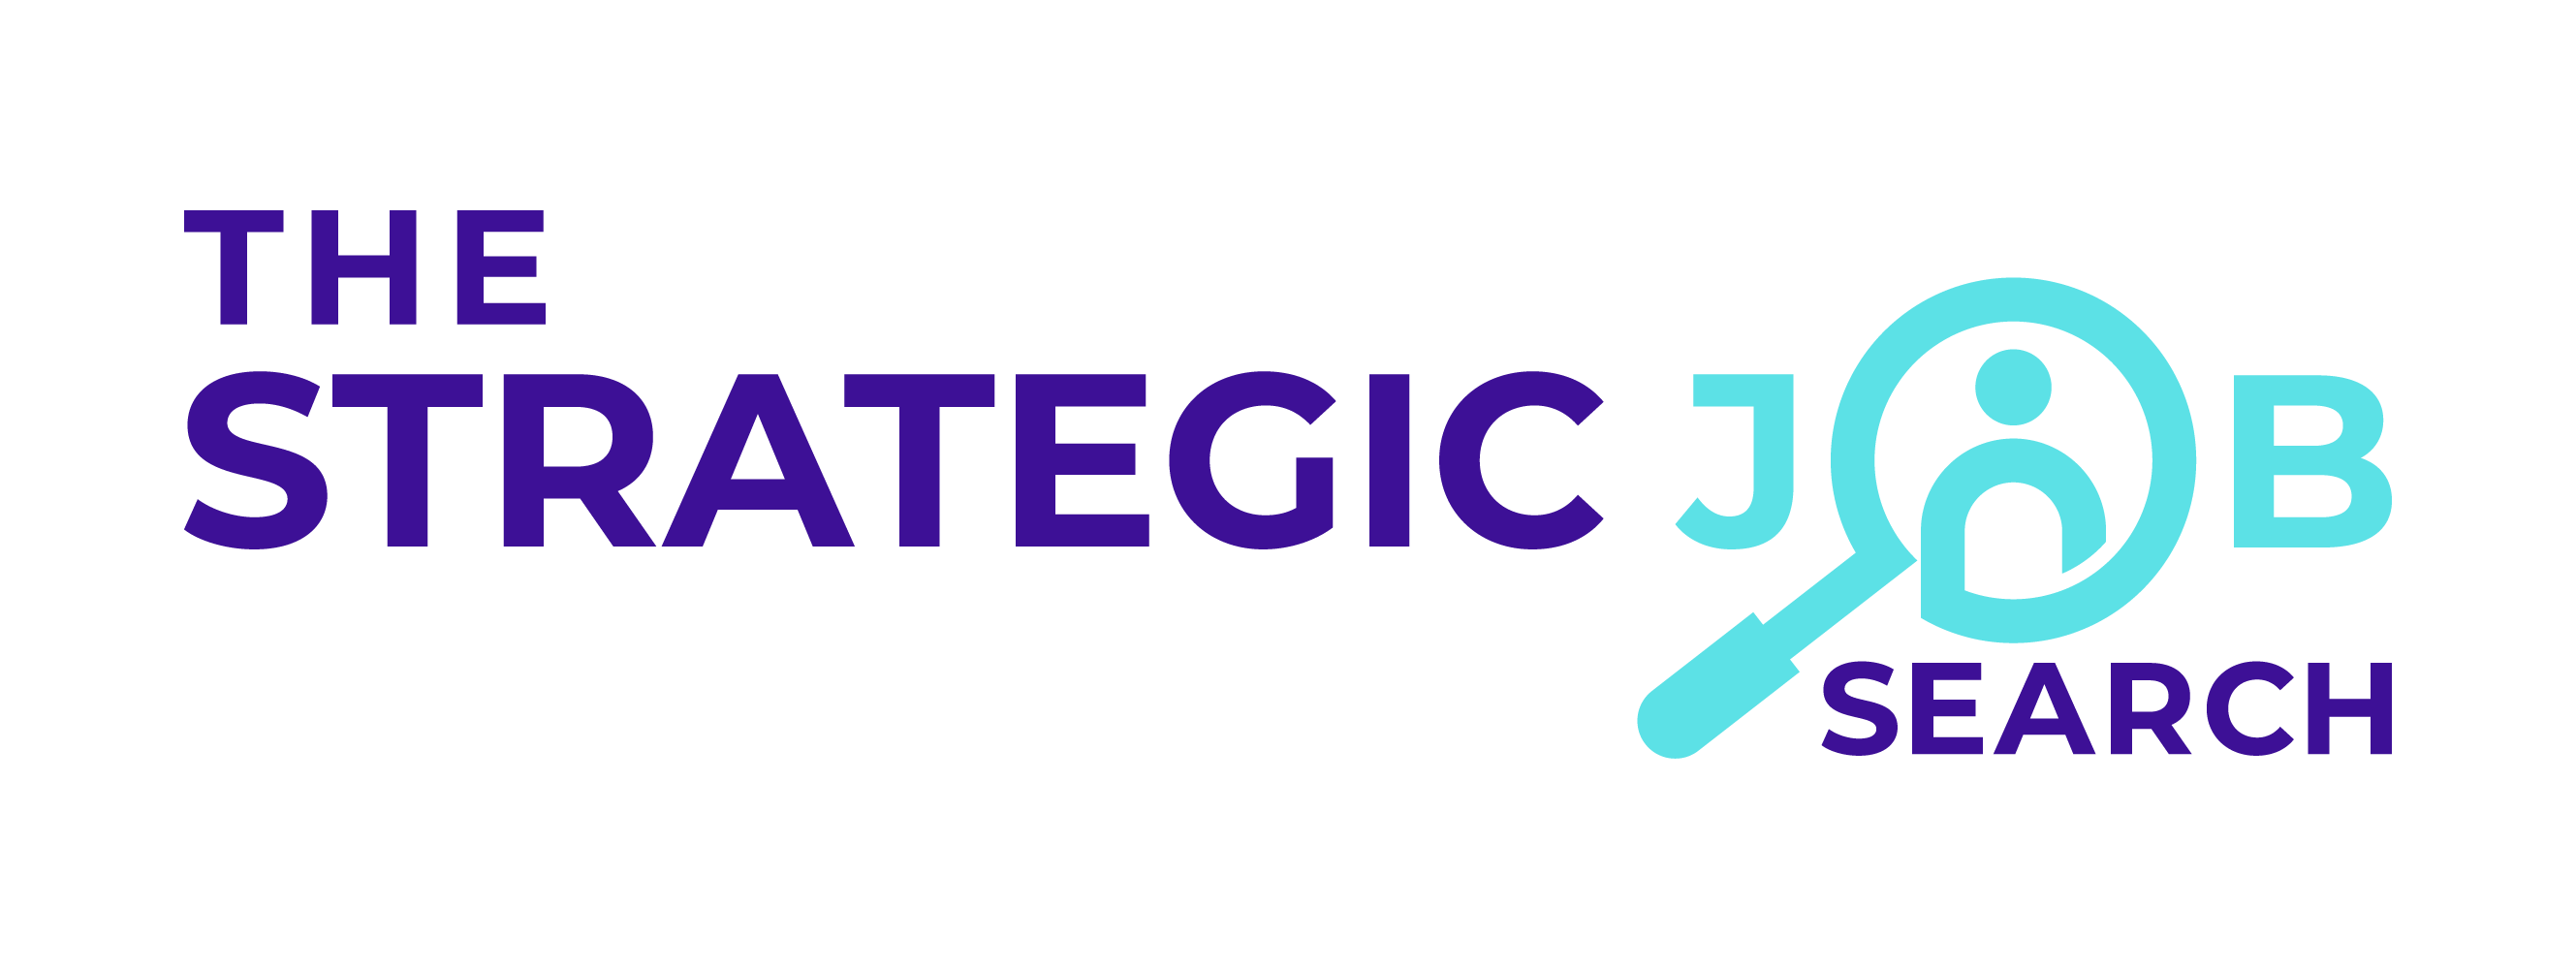 The strategic job search logo